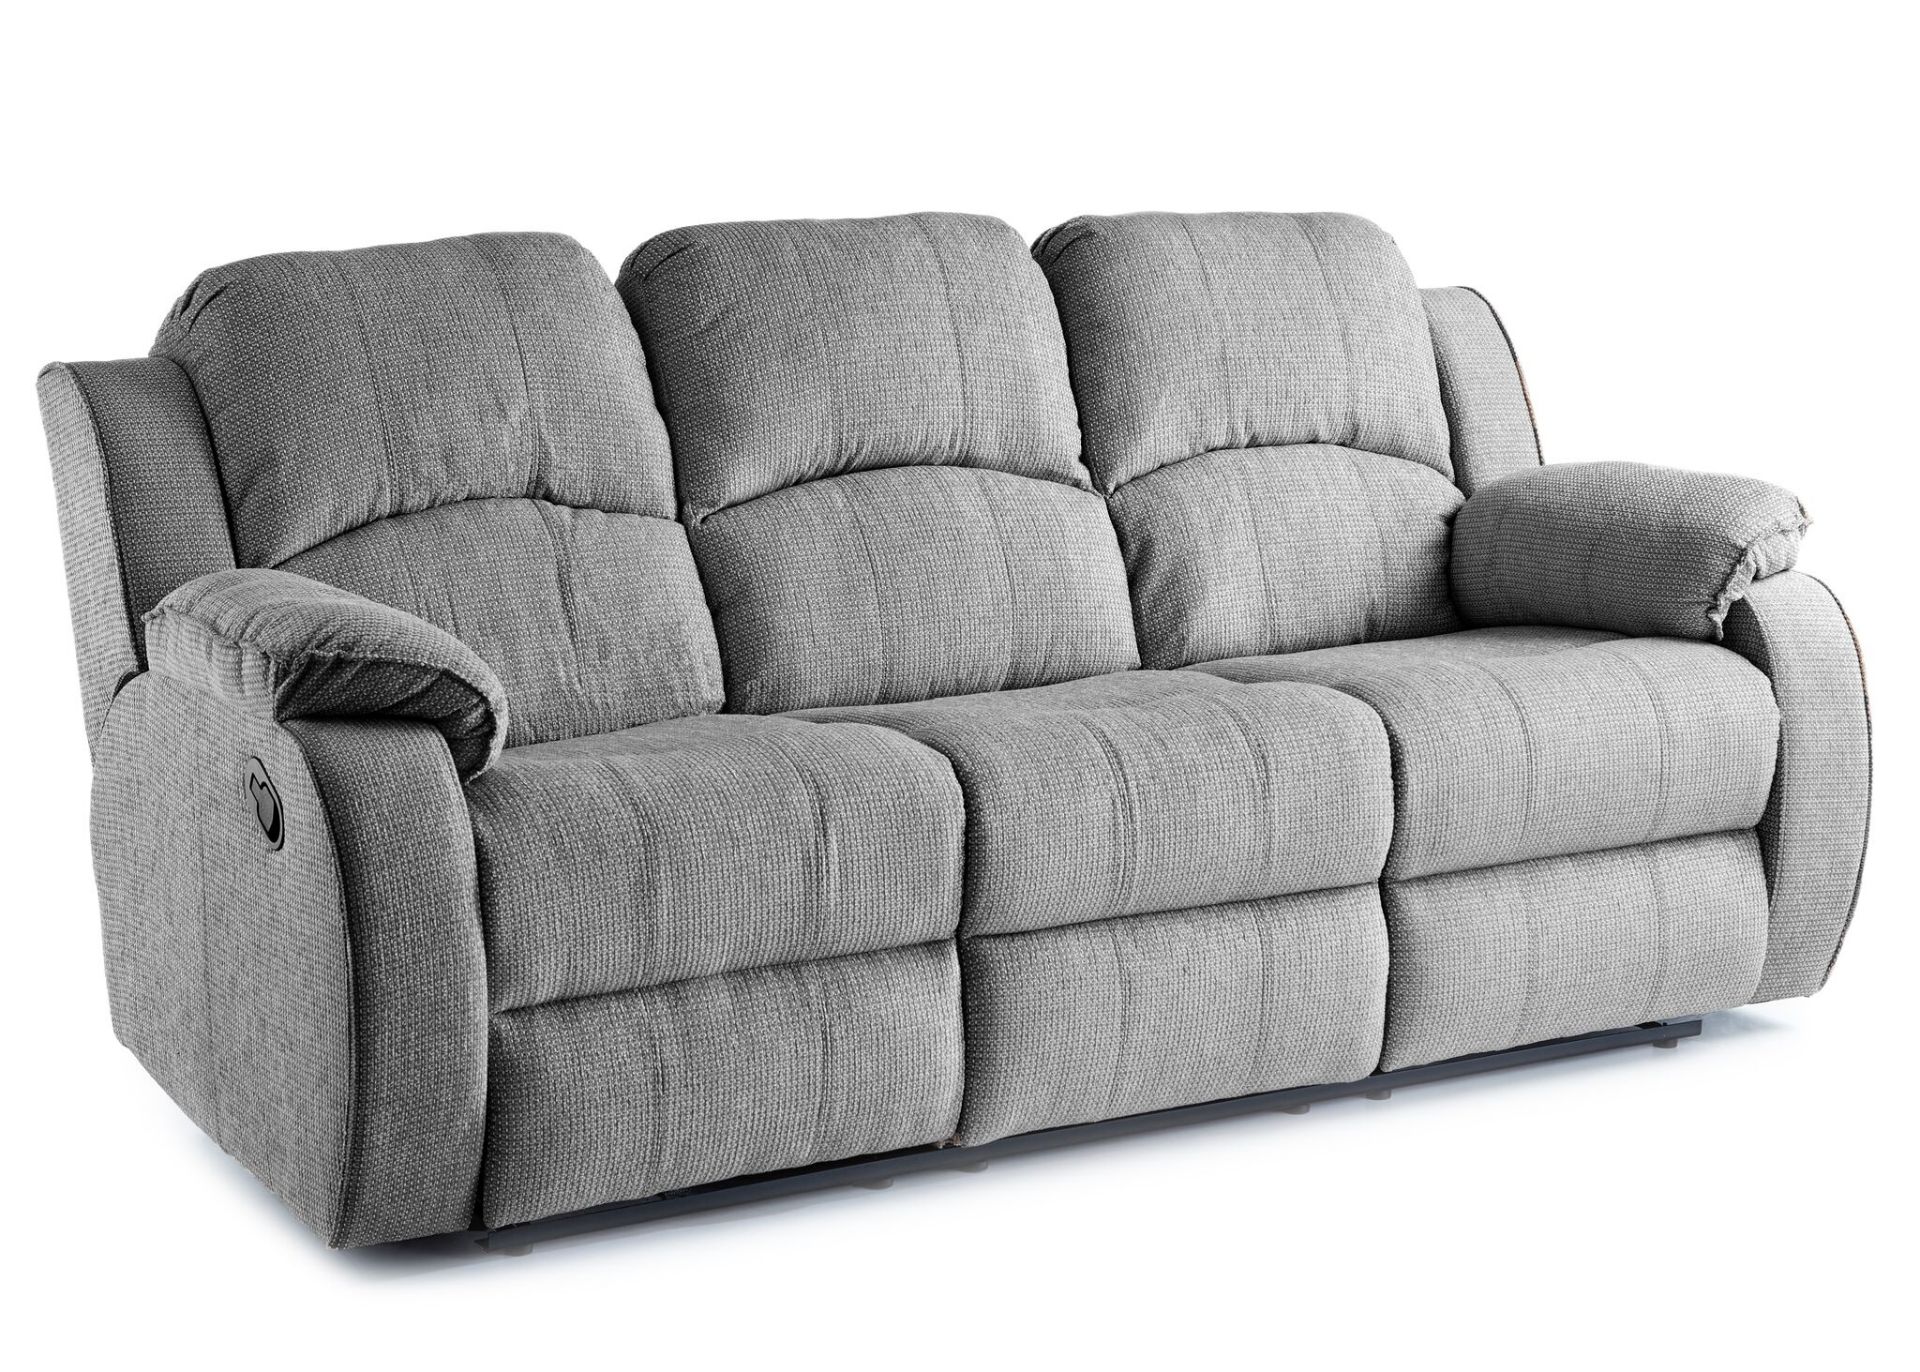 1x Brand New Buckingham 3 Seater Sofa in Graphite Tweed